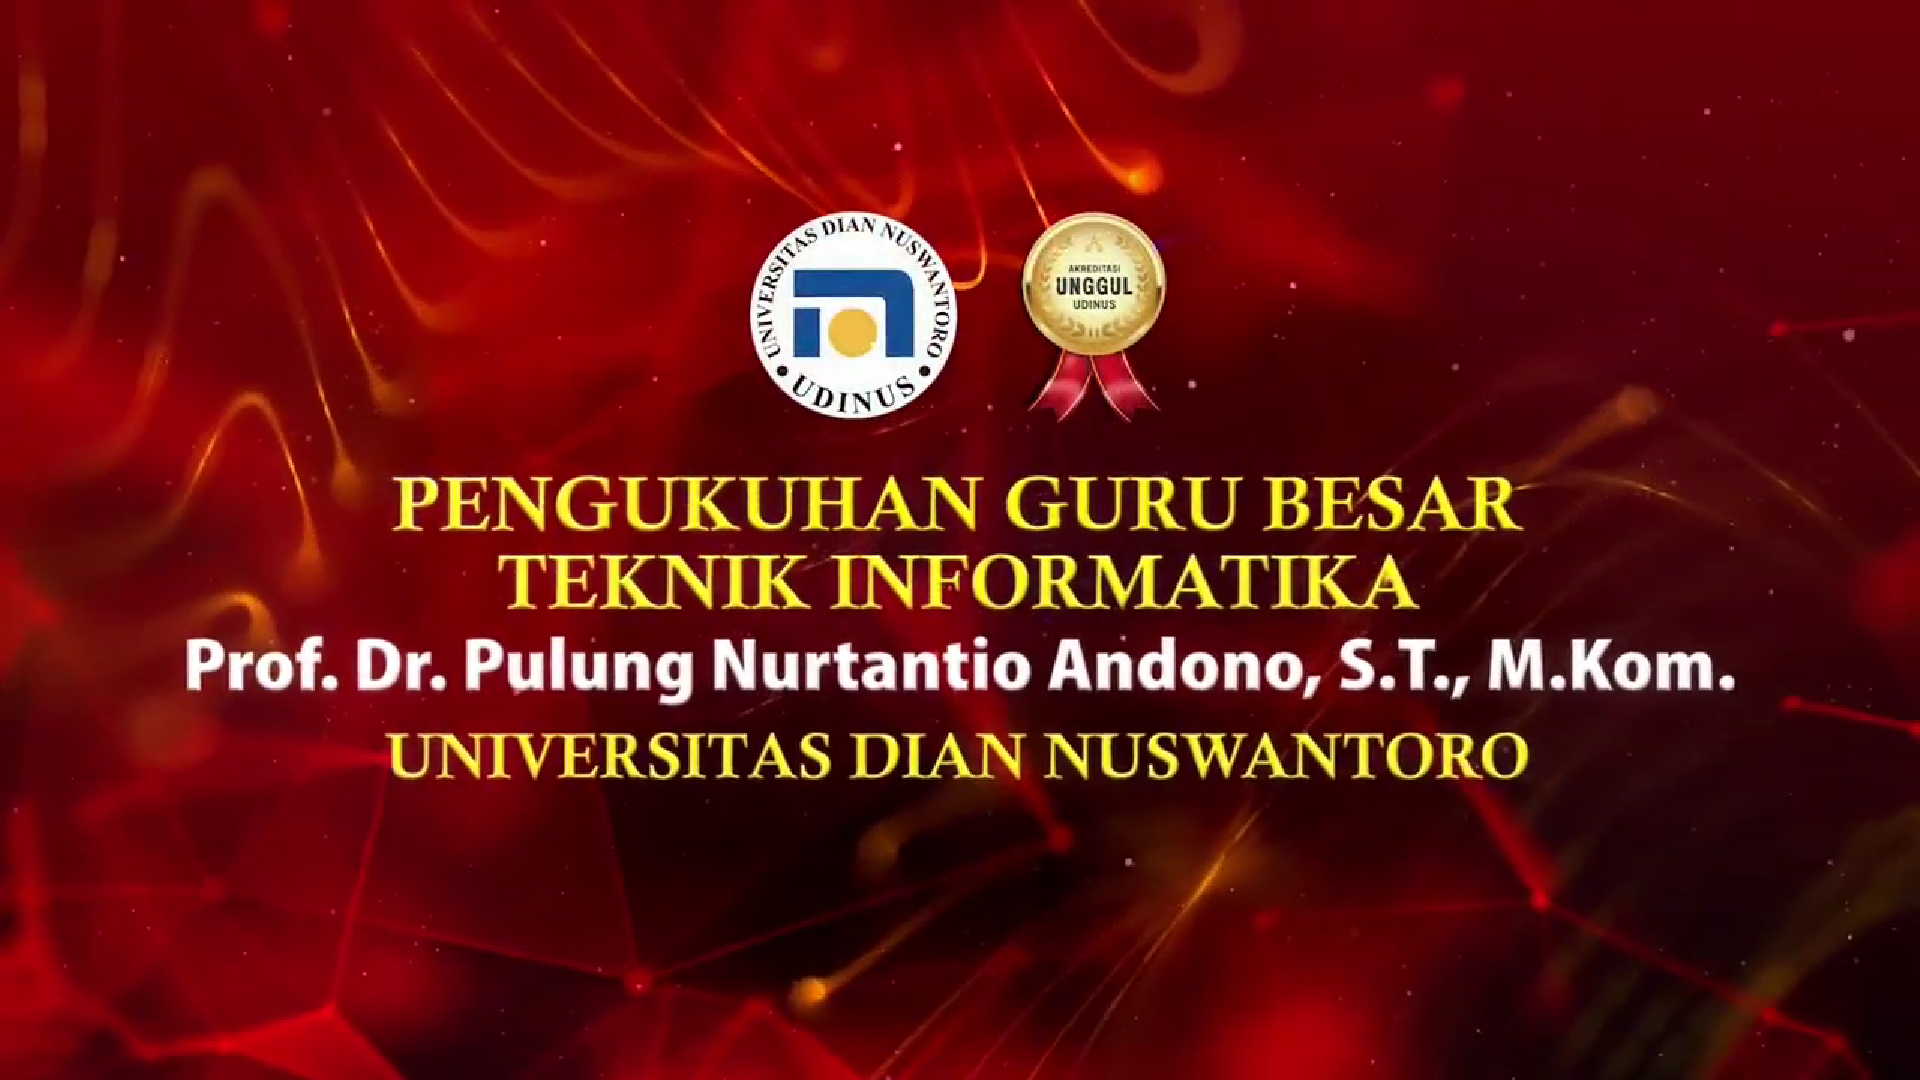 Pengukuhan Guru Besar Prof. Dr. Pulung Nurtantio Andono, ST., M.Kom